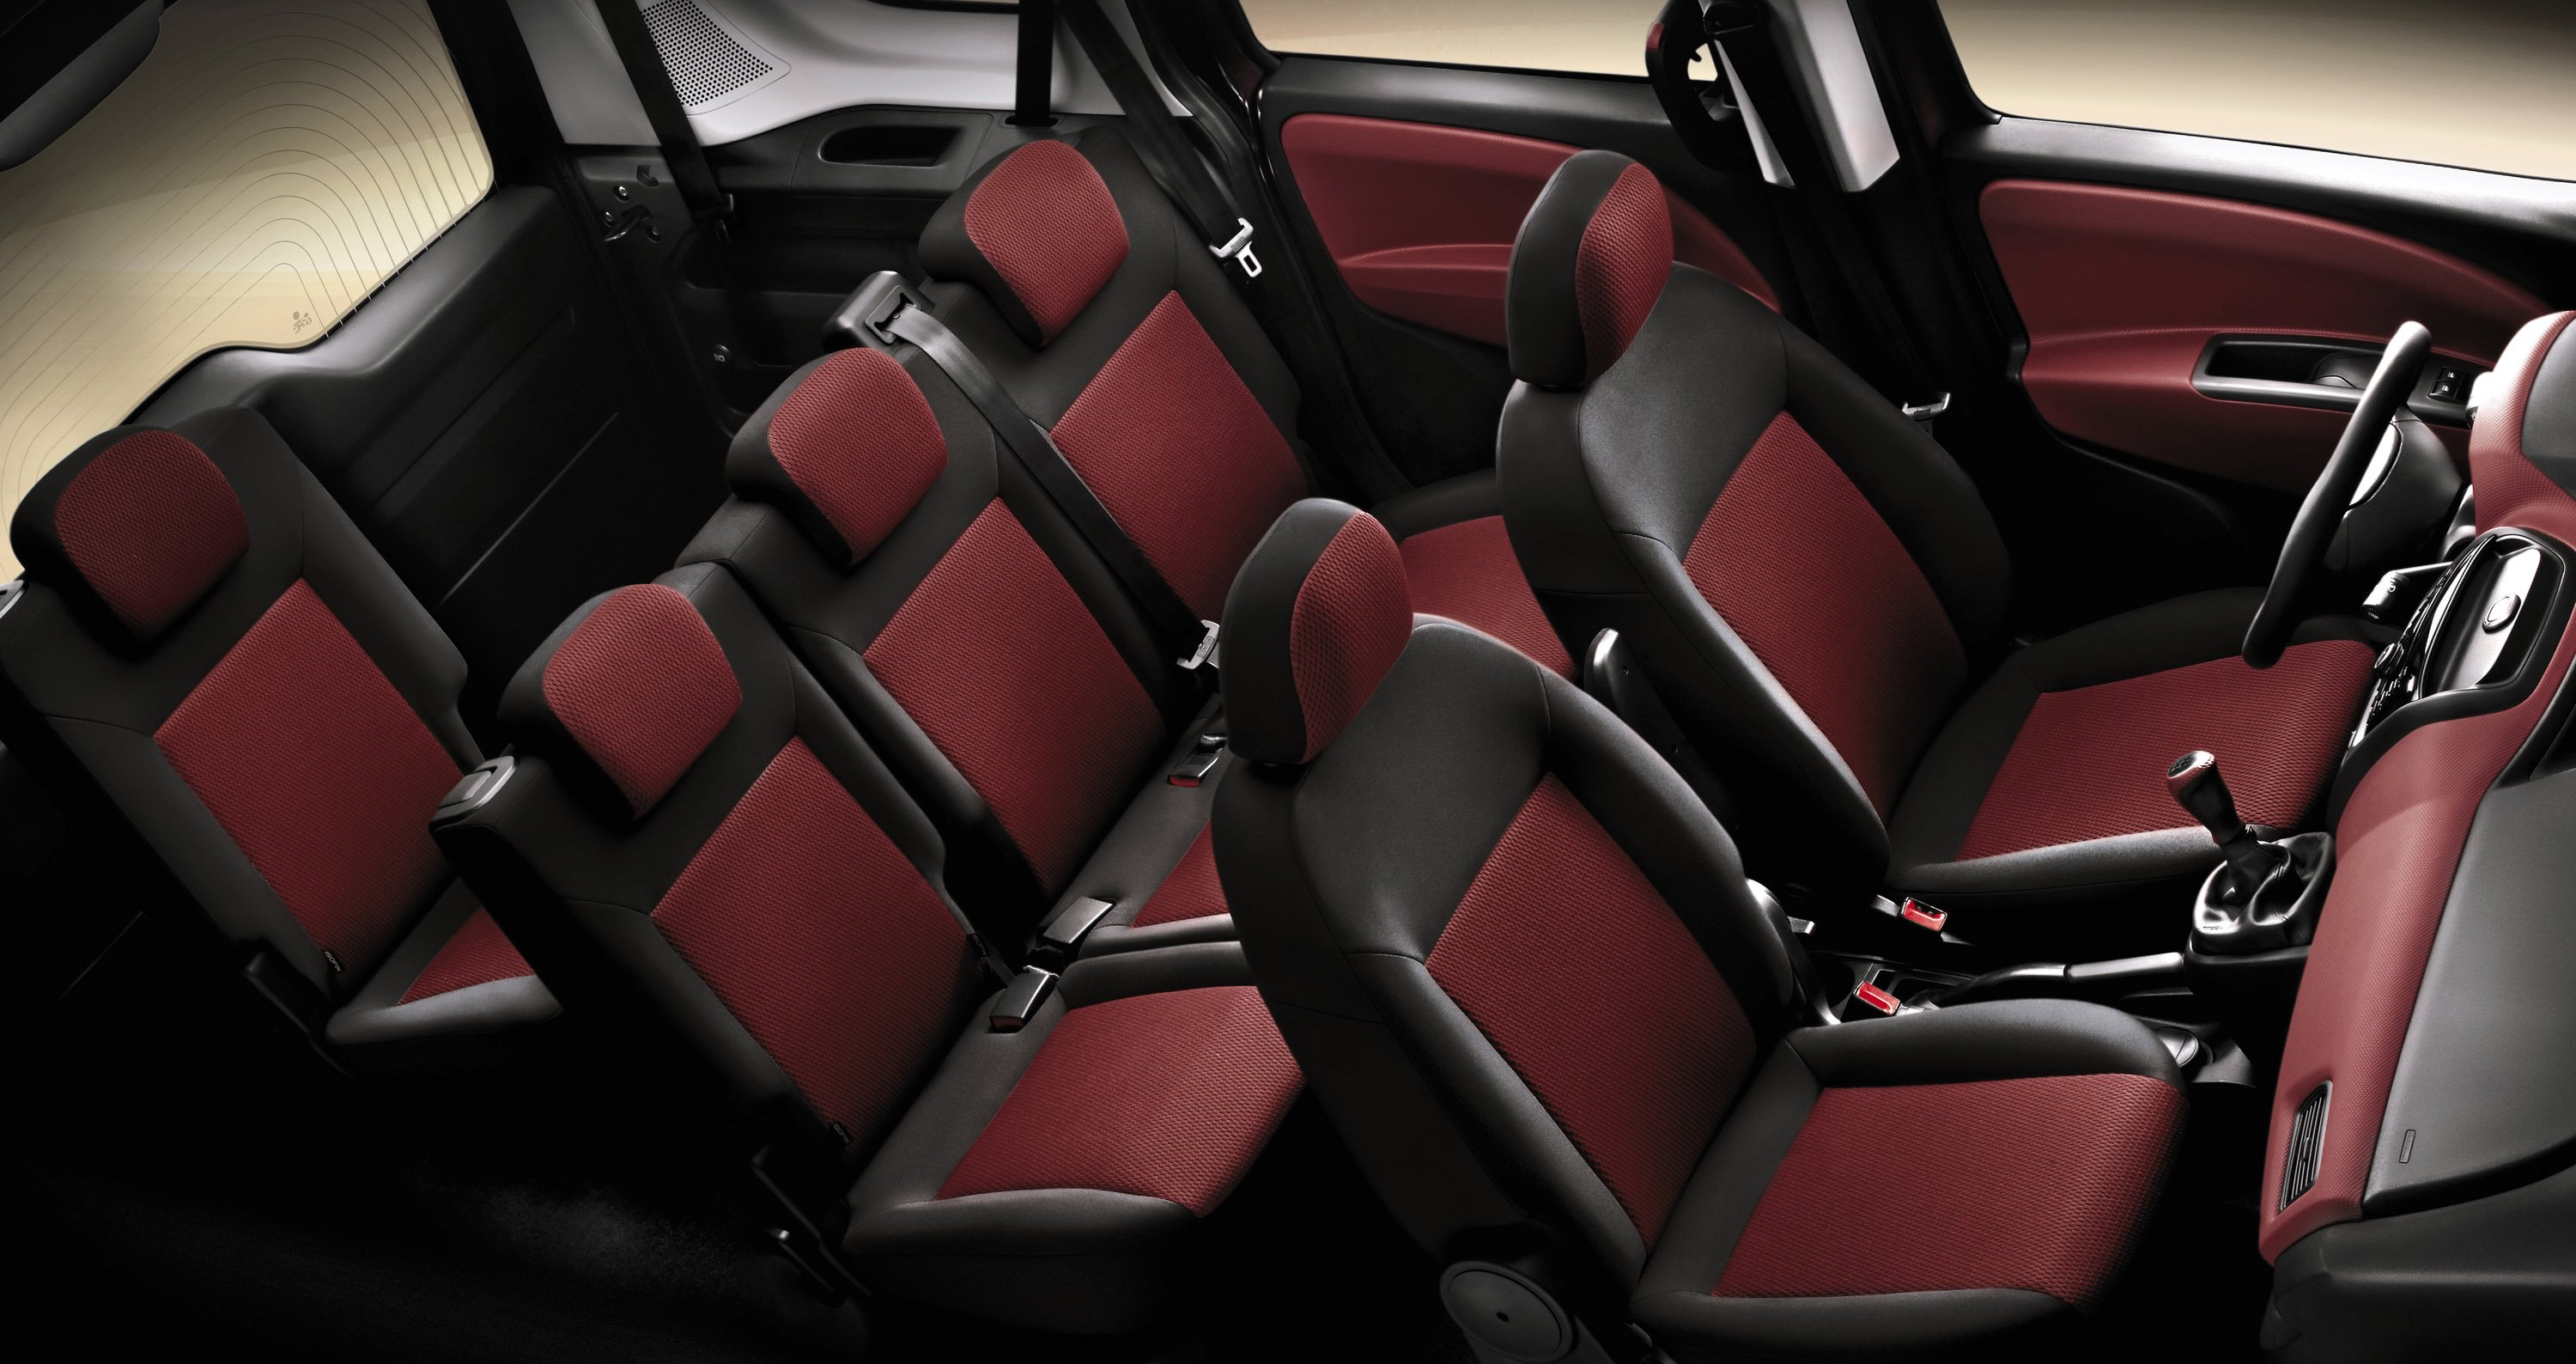 Fiat Doblo interior - Seats